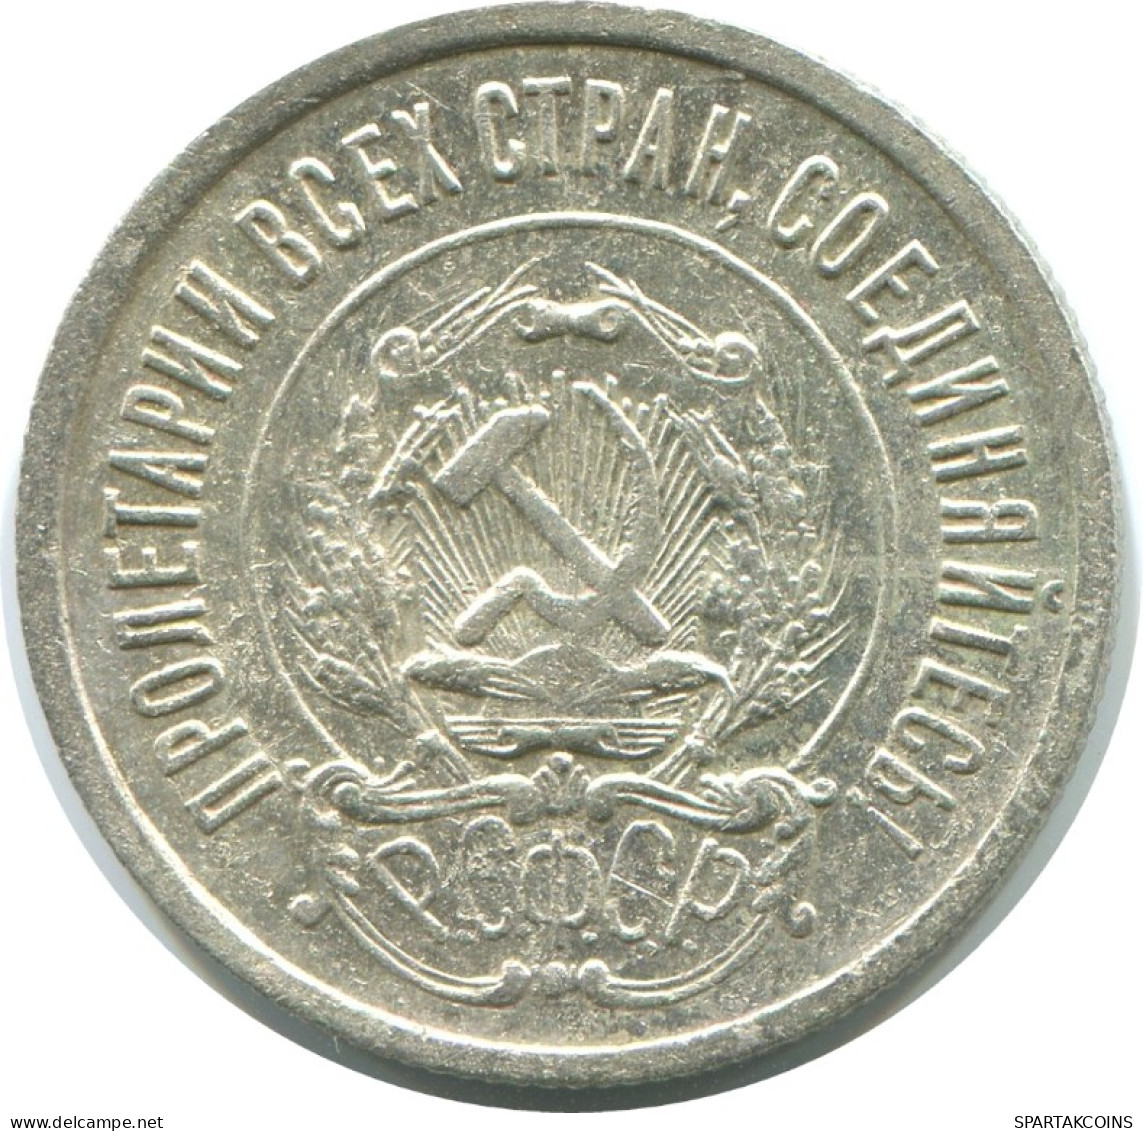 20 KOPEKS 1923 RUSSIA RSFSR SILVER Coin HIGH GRADE #AF374.4.U.A - Russia